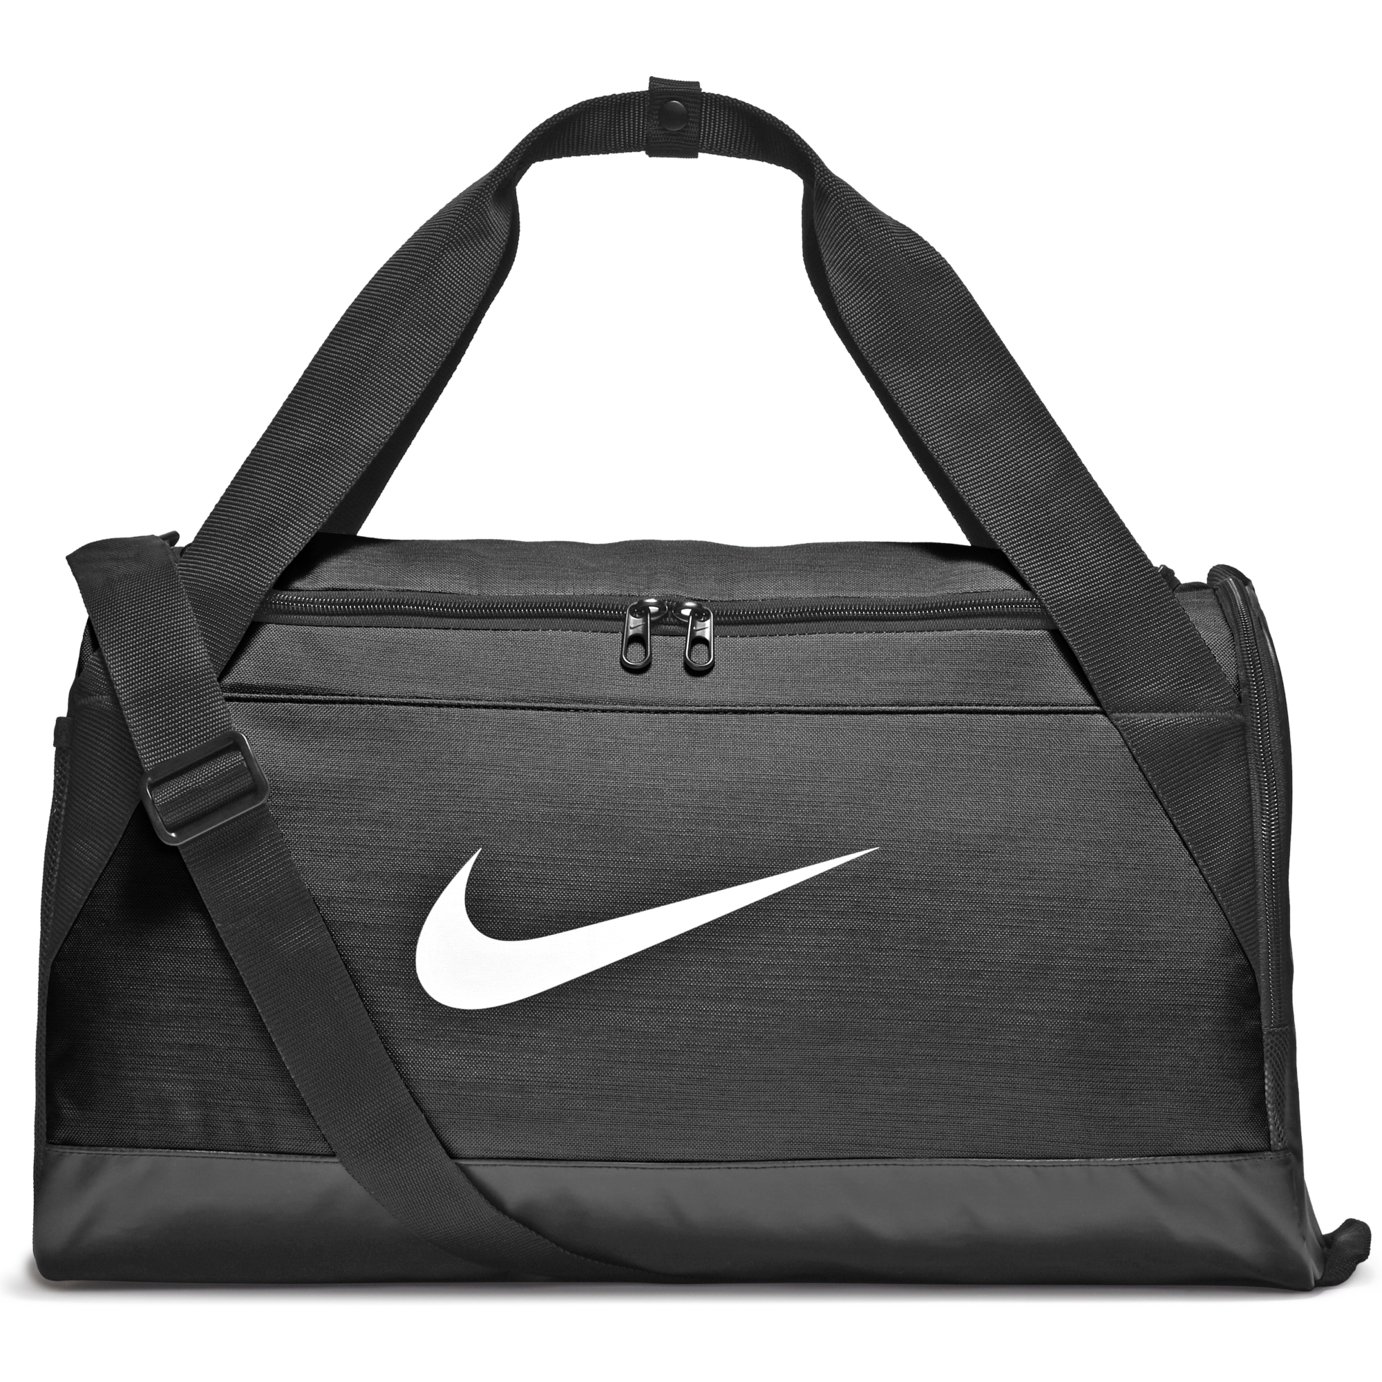 Nike Gym bags | Argos